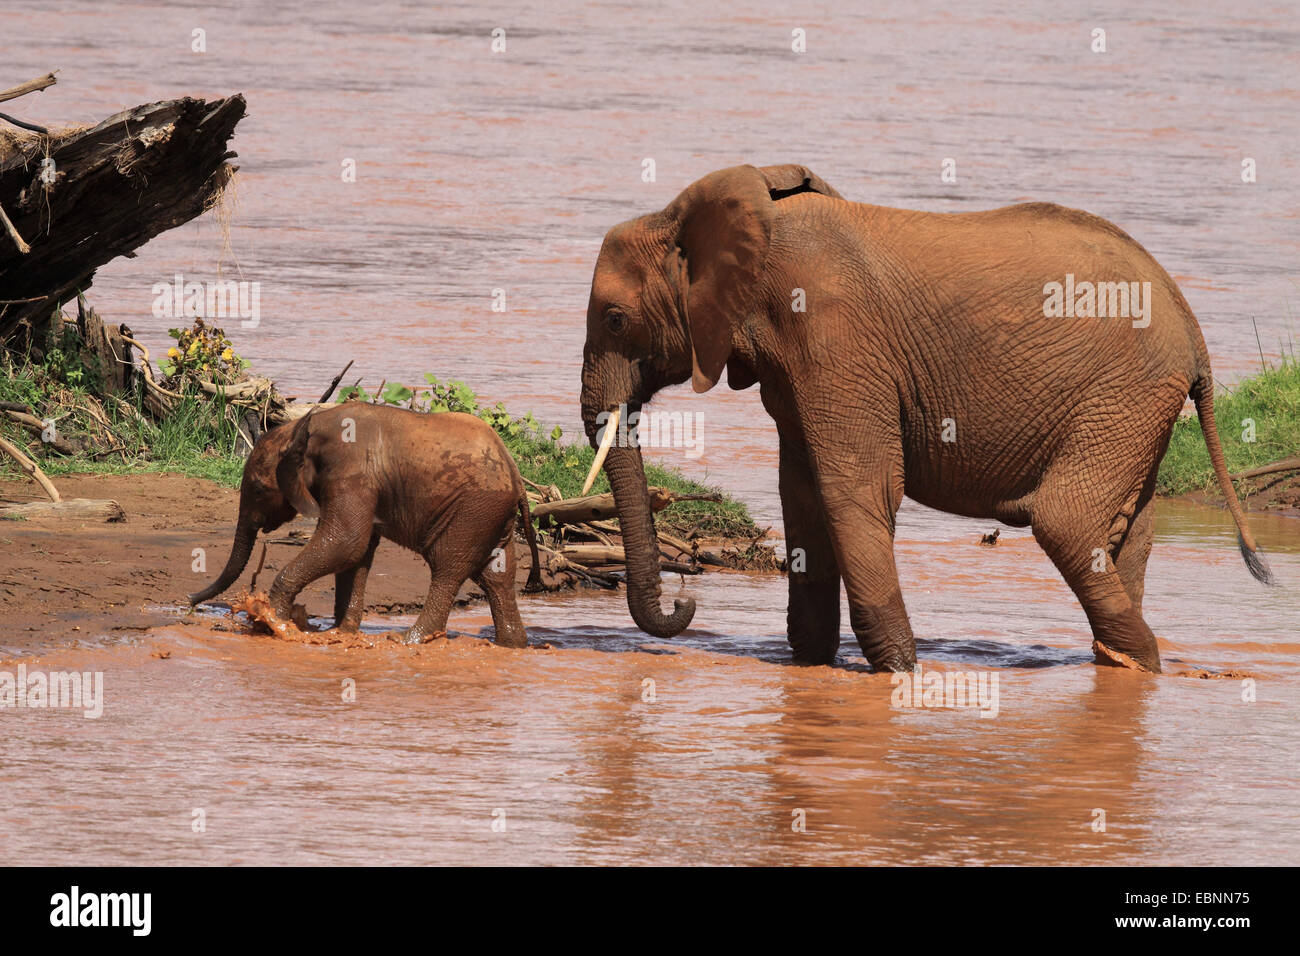 African elephant (Loxodonta africana), cow elephant with calf in shallow water, Kenya, Samburu National Reserve Stock Photo